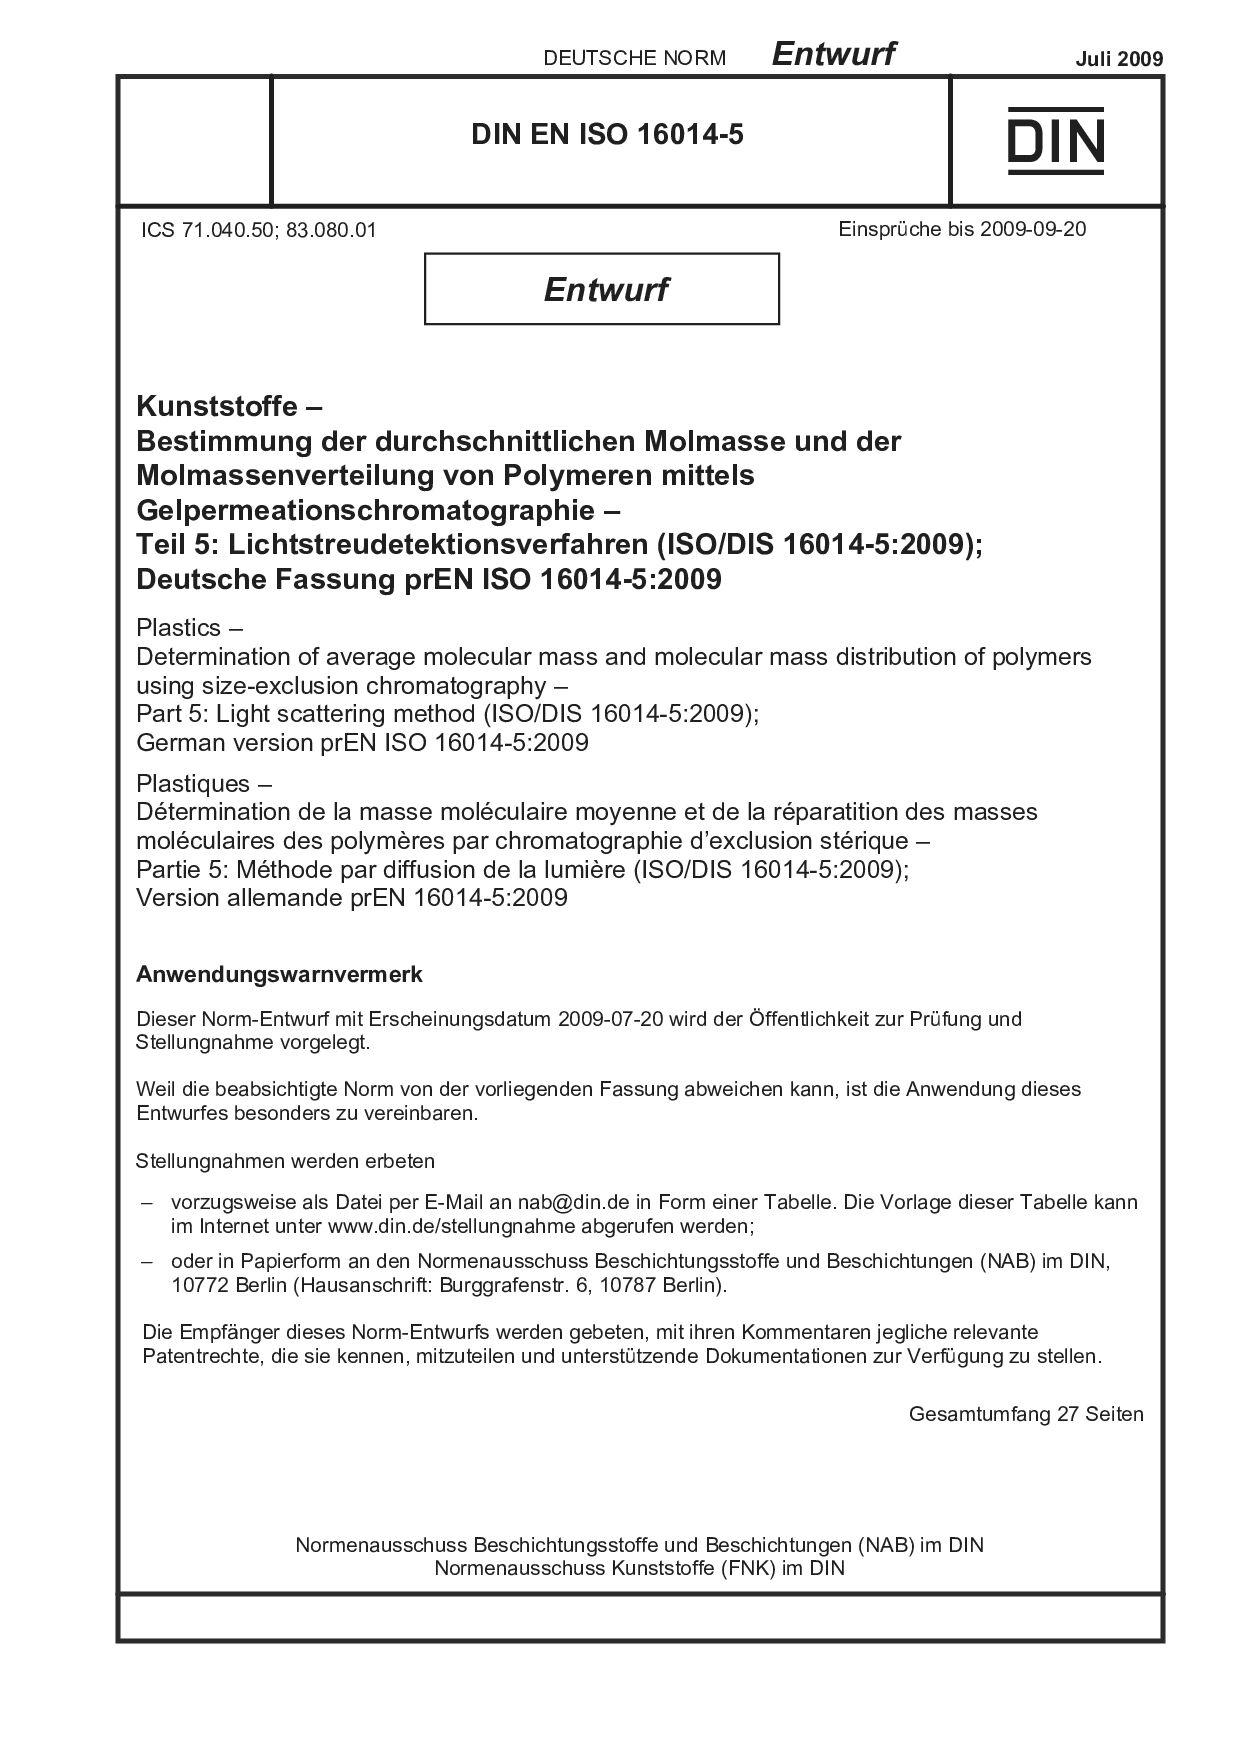 DIN EN ISO 16014-5 E:2009-07